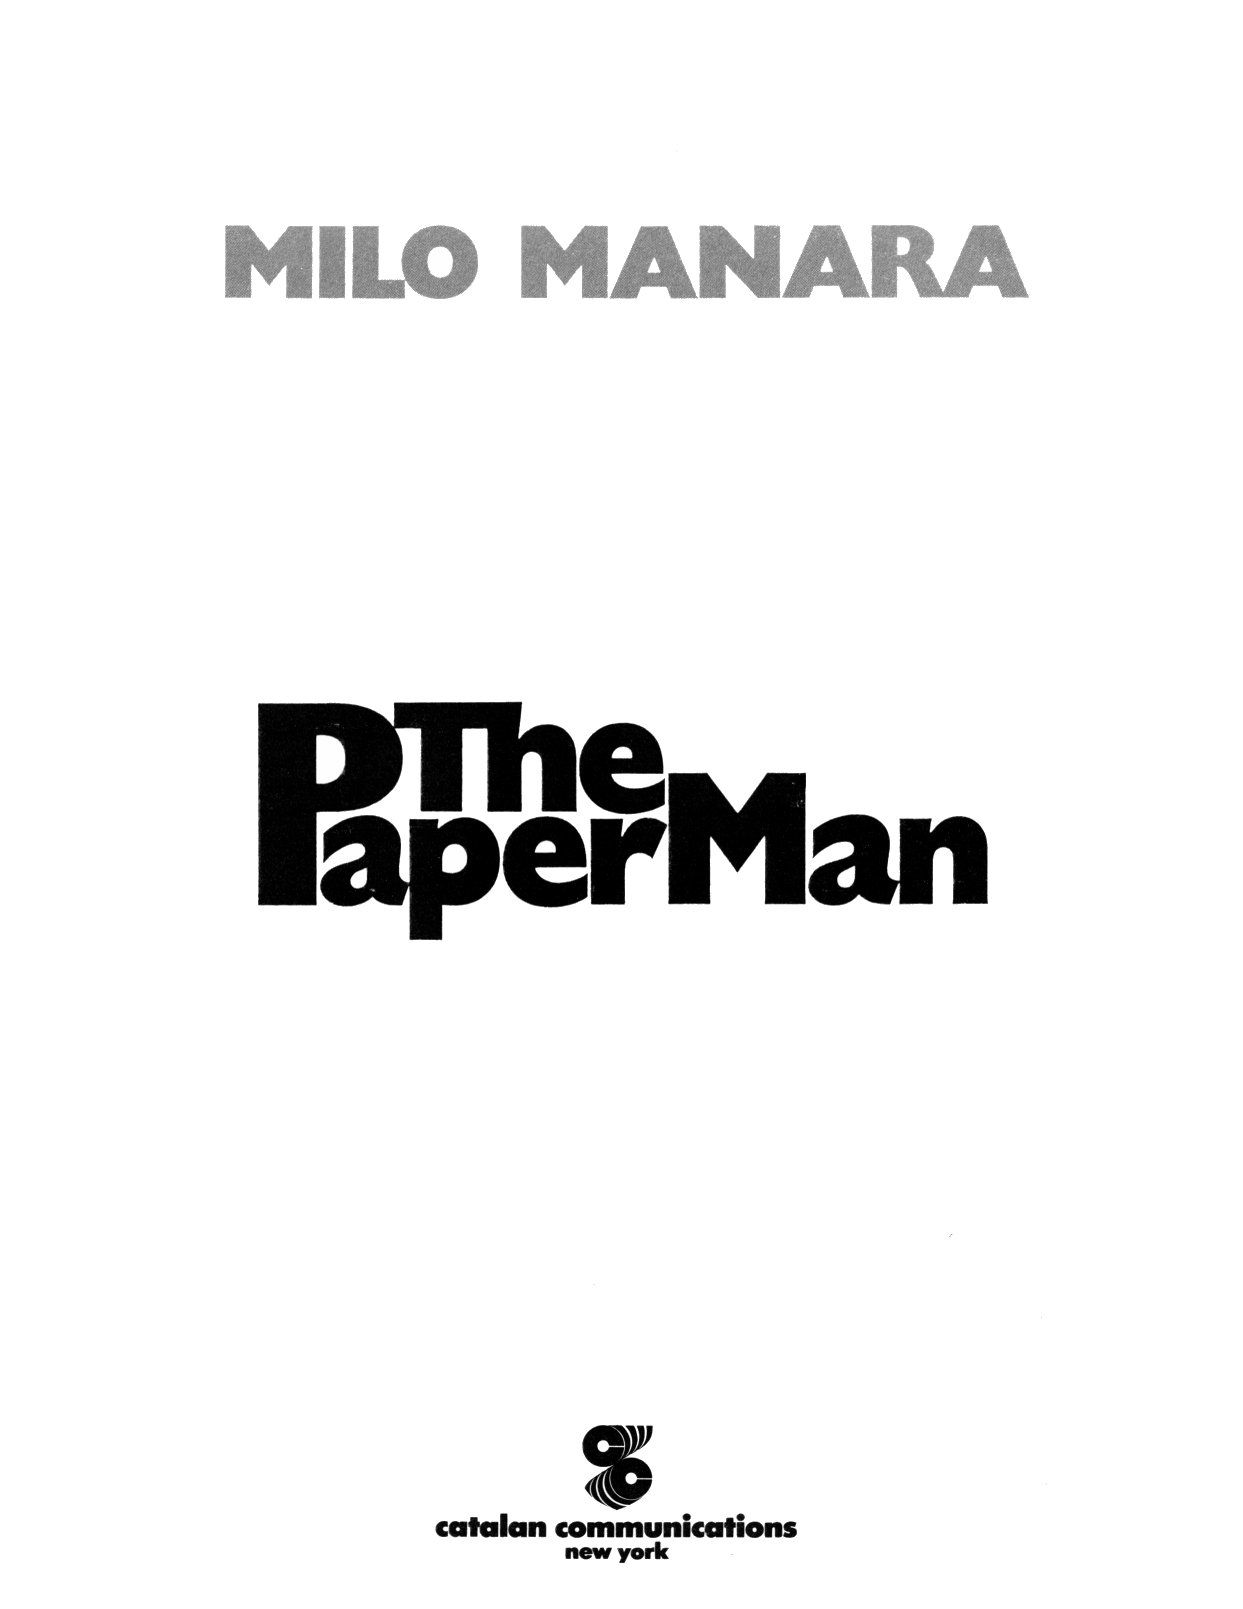 Milo Manara The Paper Man {Jeff Lisle}